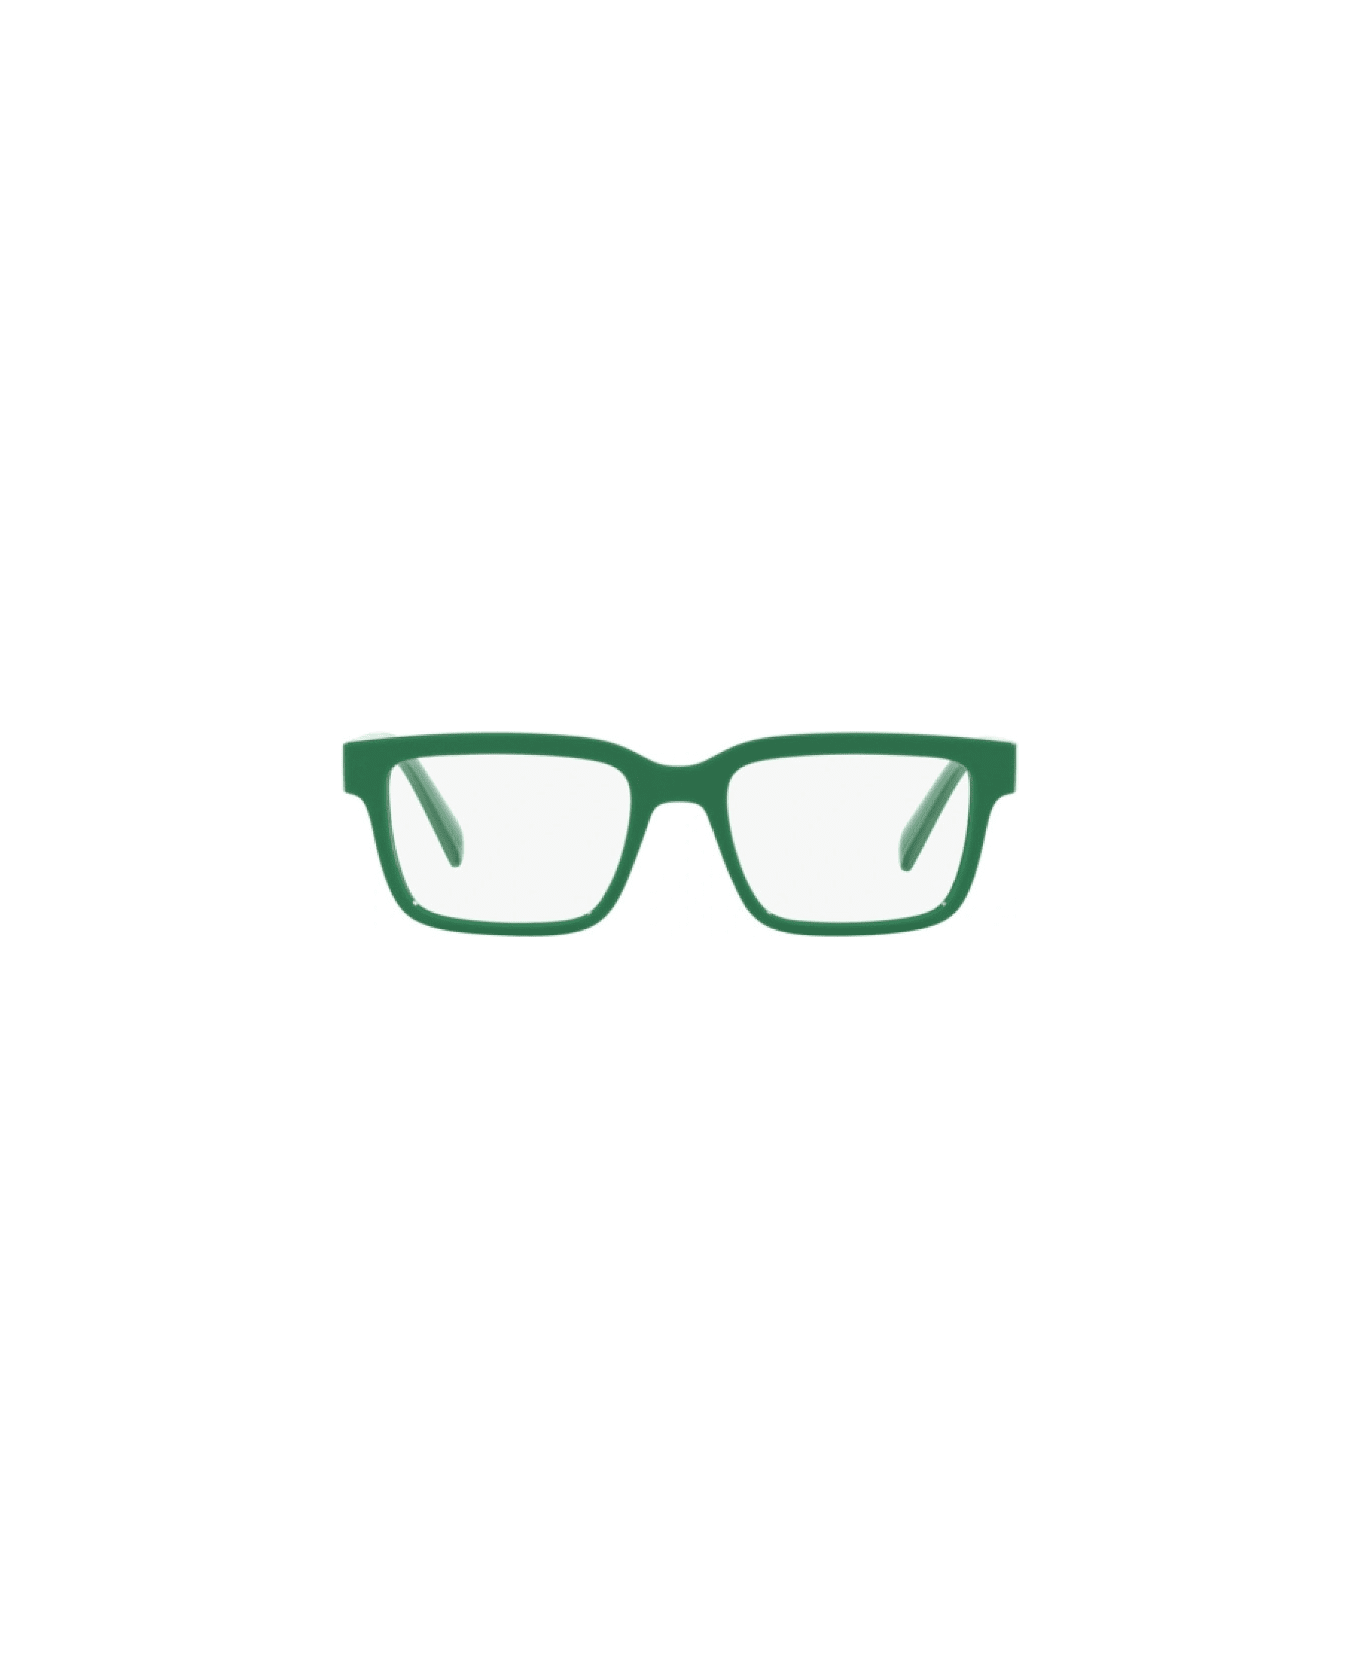 Denim Bermuda Shorts Dolce&gabbana Kids Eyewear DG5102 Glasses - Nero